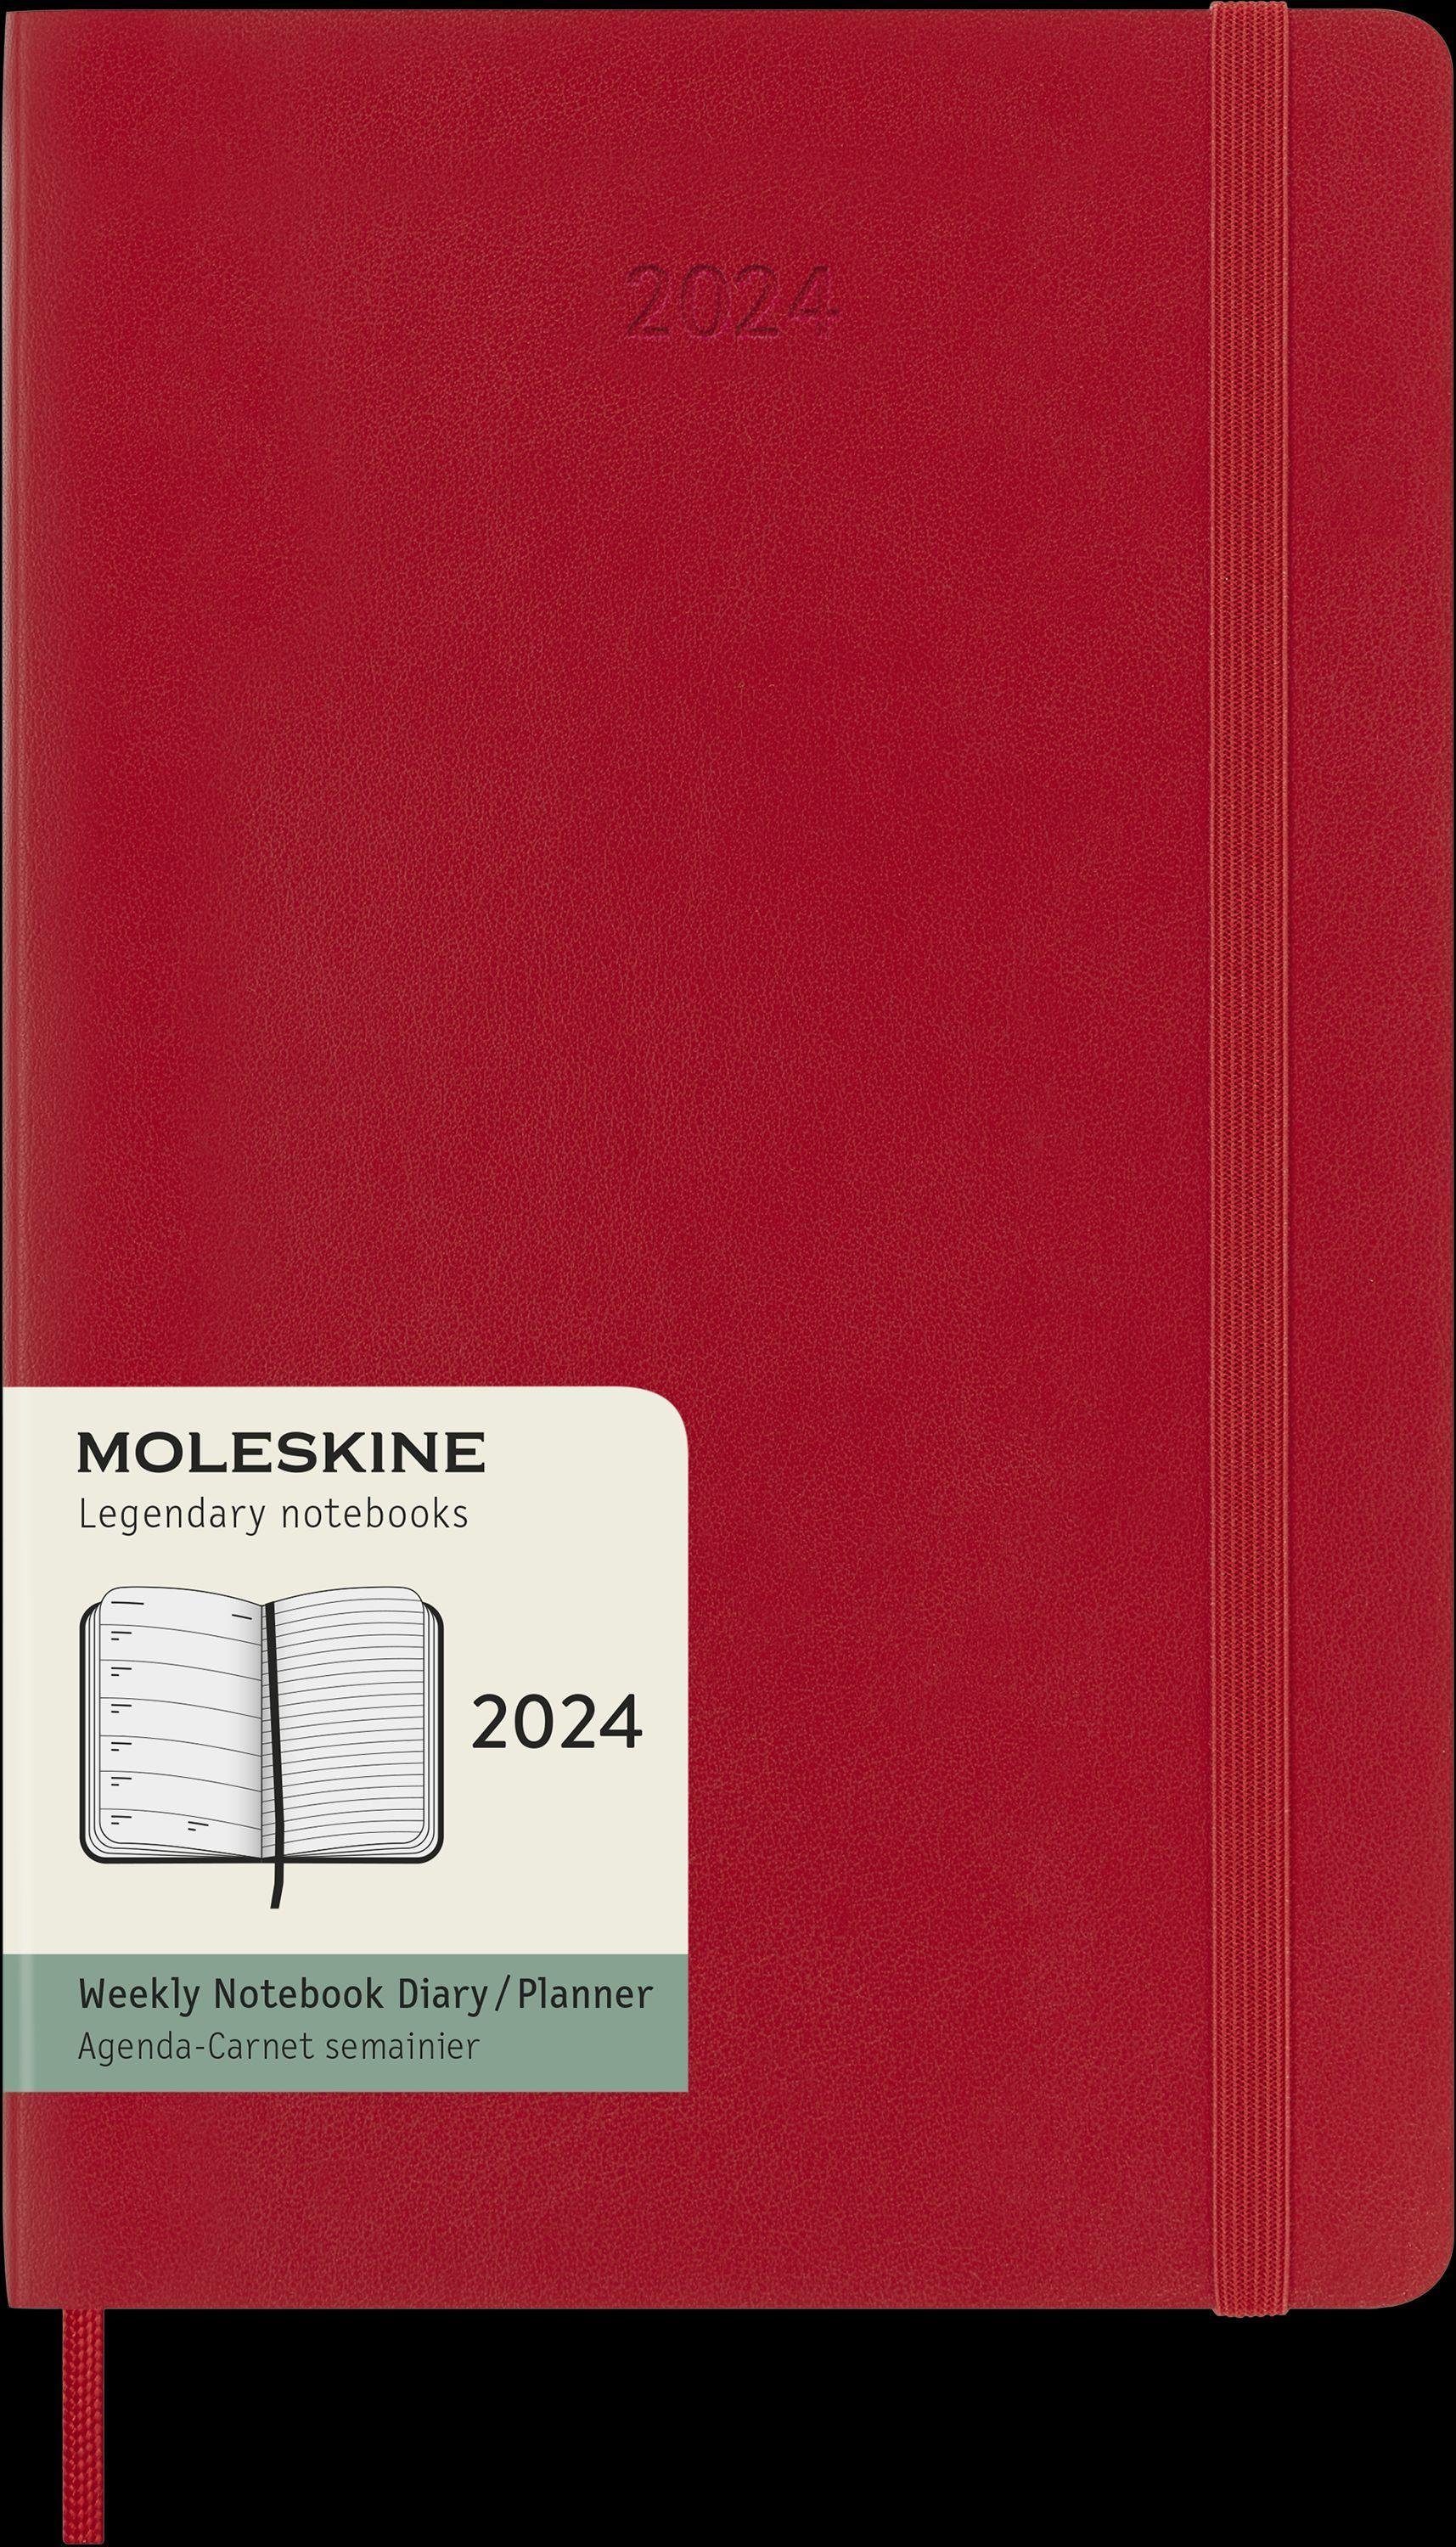 MOLESKINE Notizbuch Moleskine 12 Monate Wochen Notizkalender 2024, Large/A5, Scharlachrot